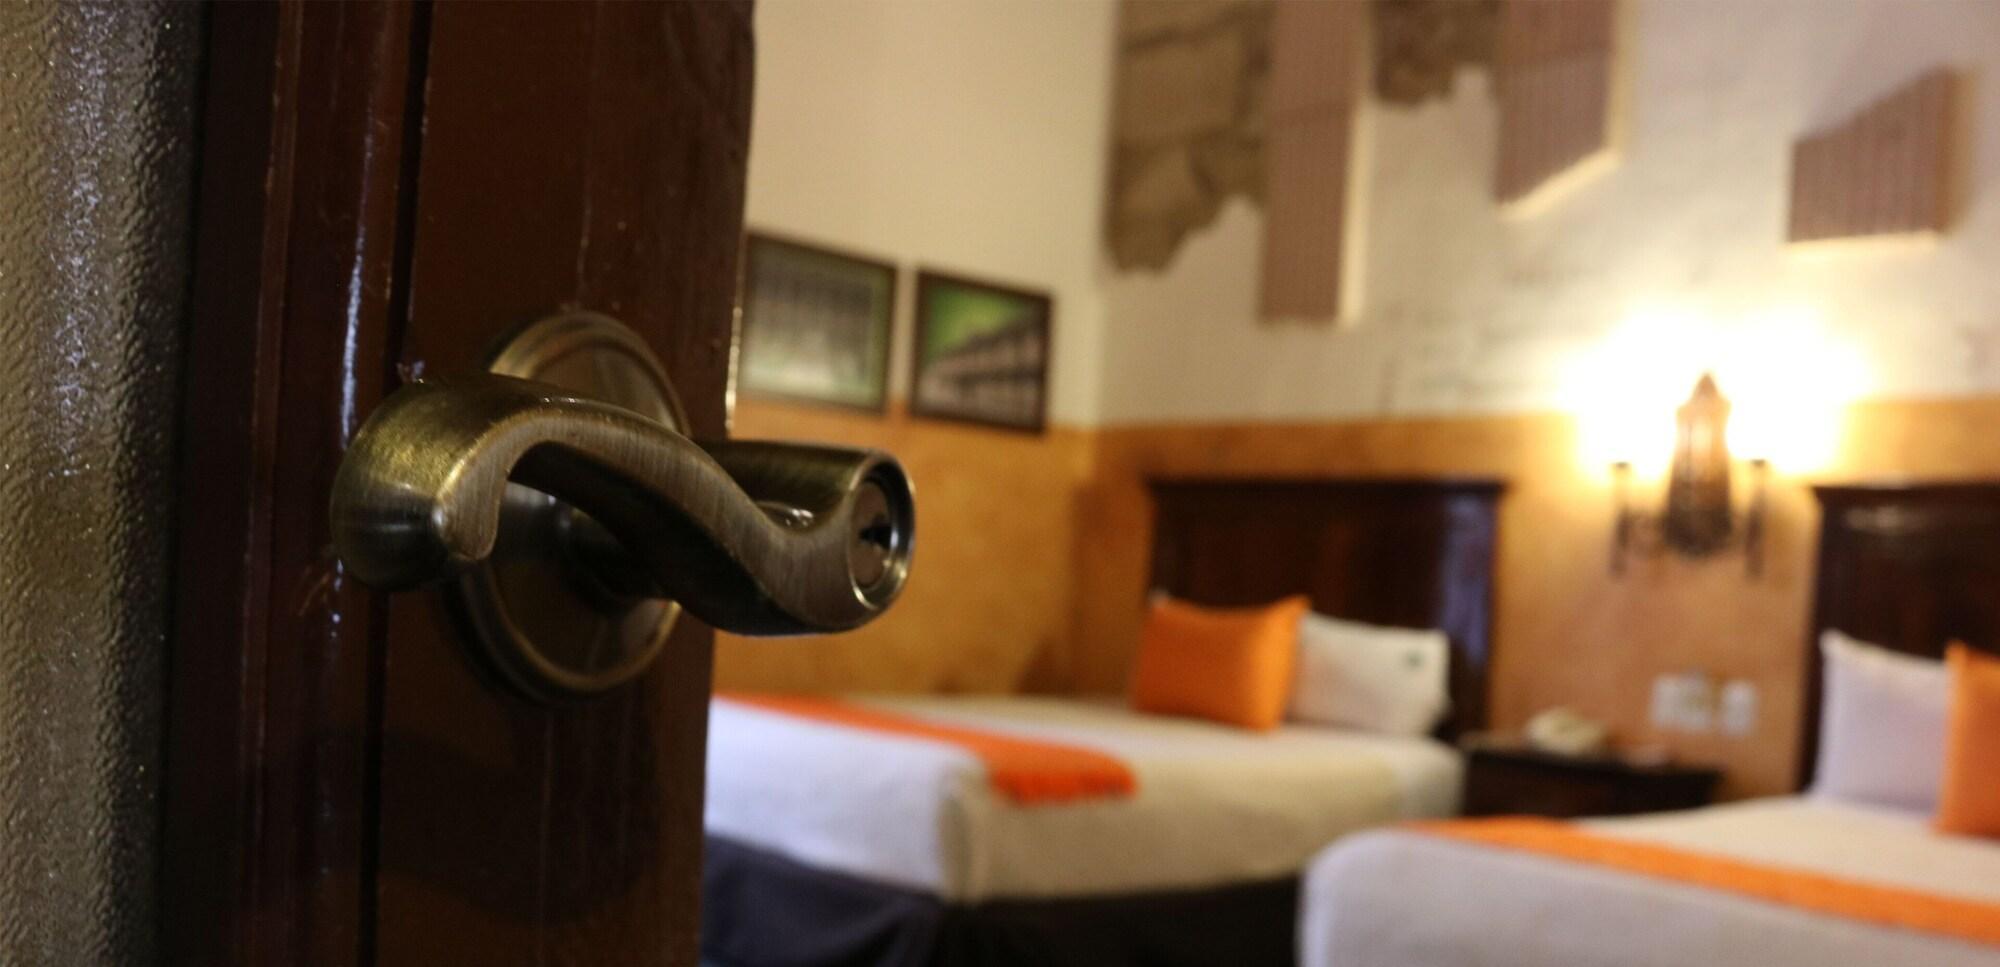 Hotel Historia Morelia Exteriér fotografie